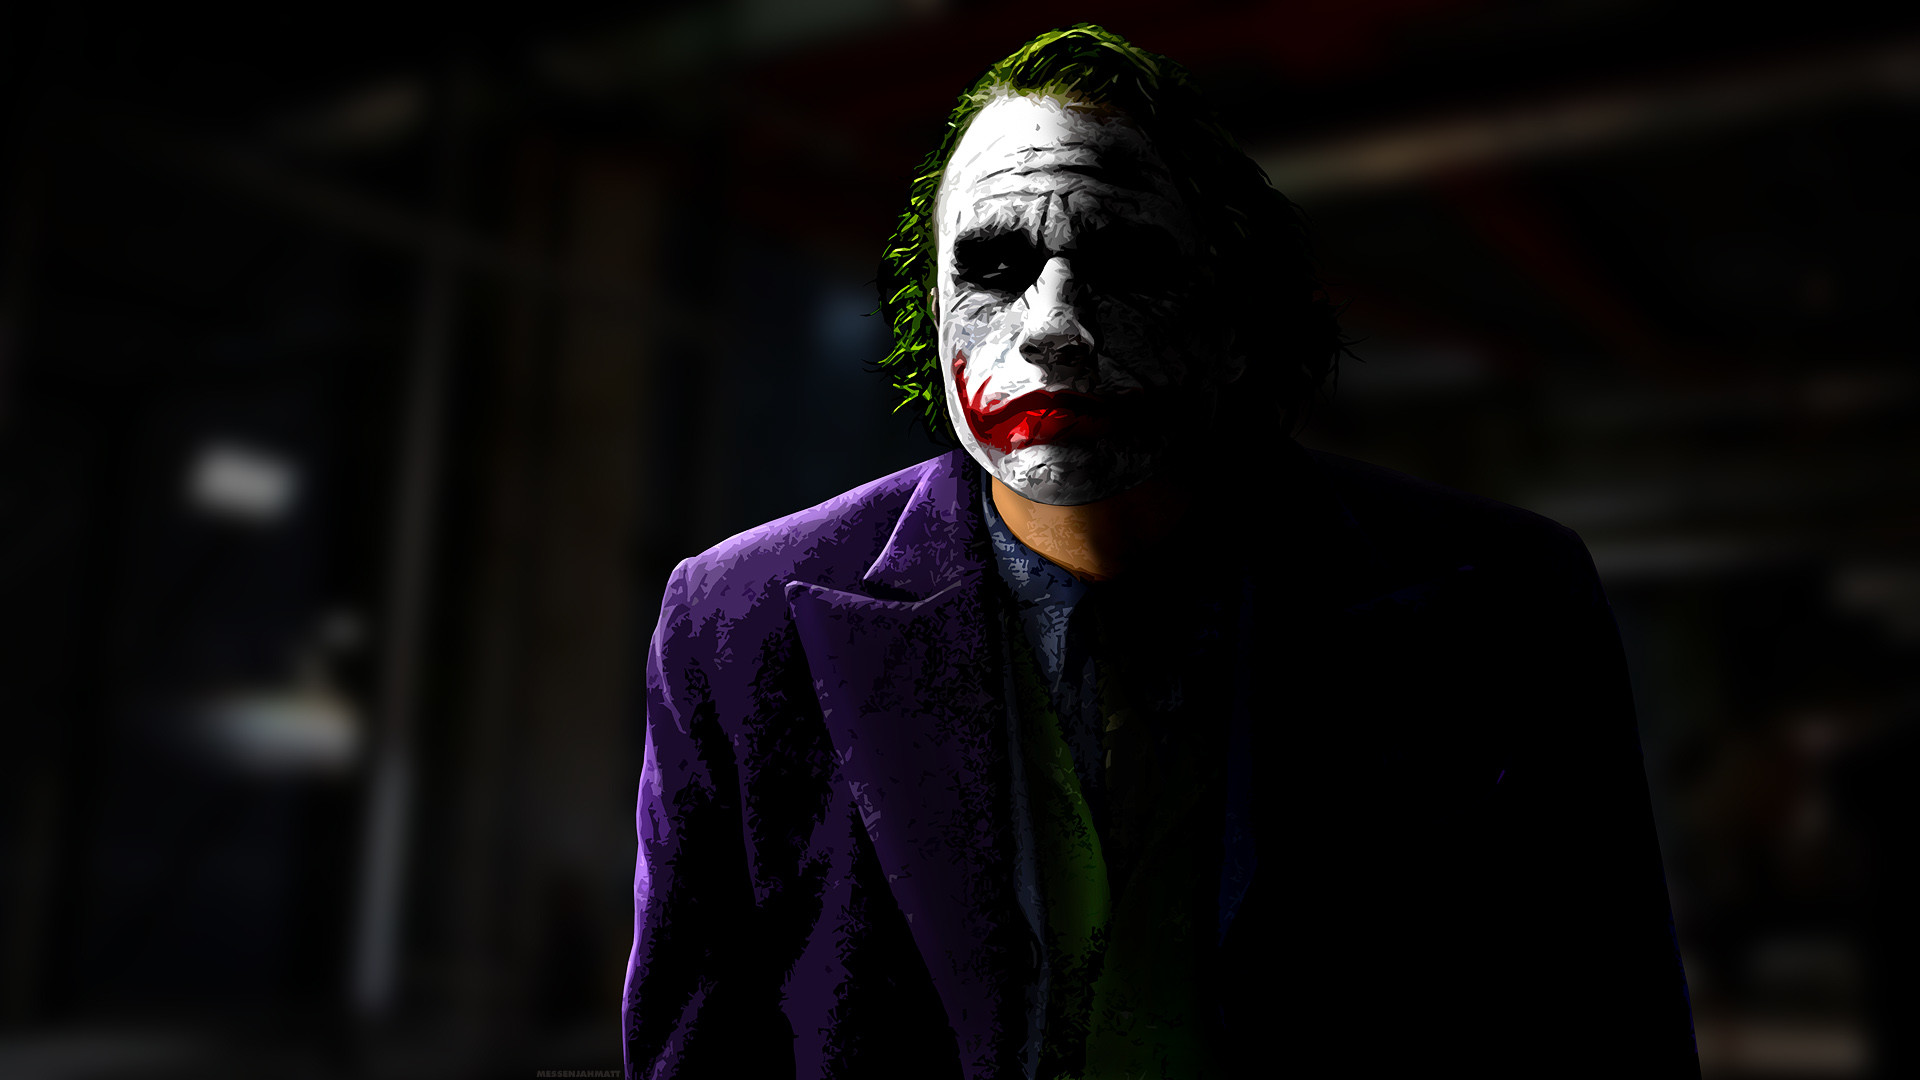 1920x1080 The Joker - The Dark Knight wallpaper